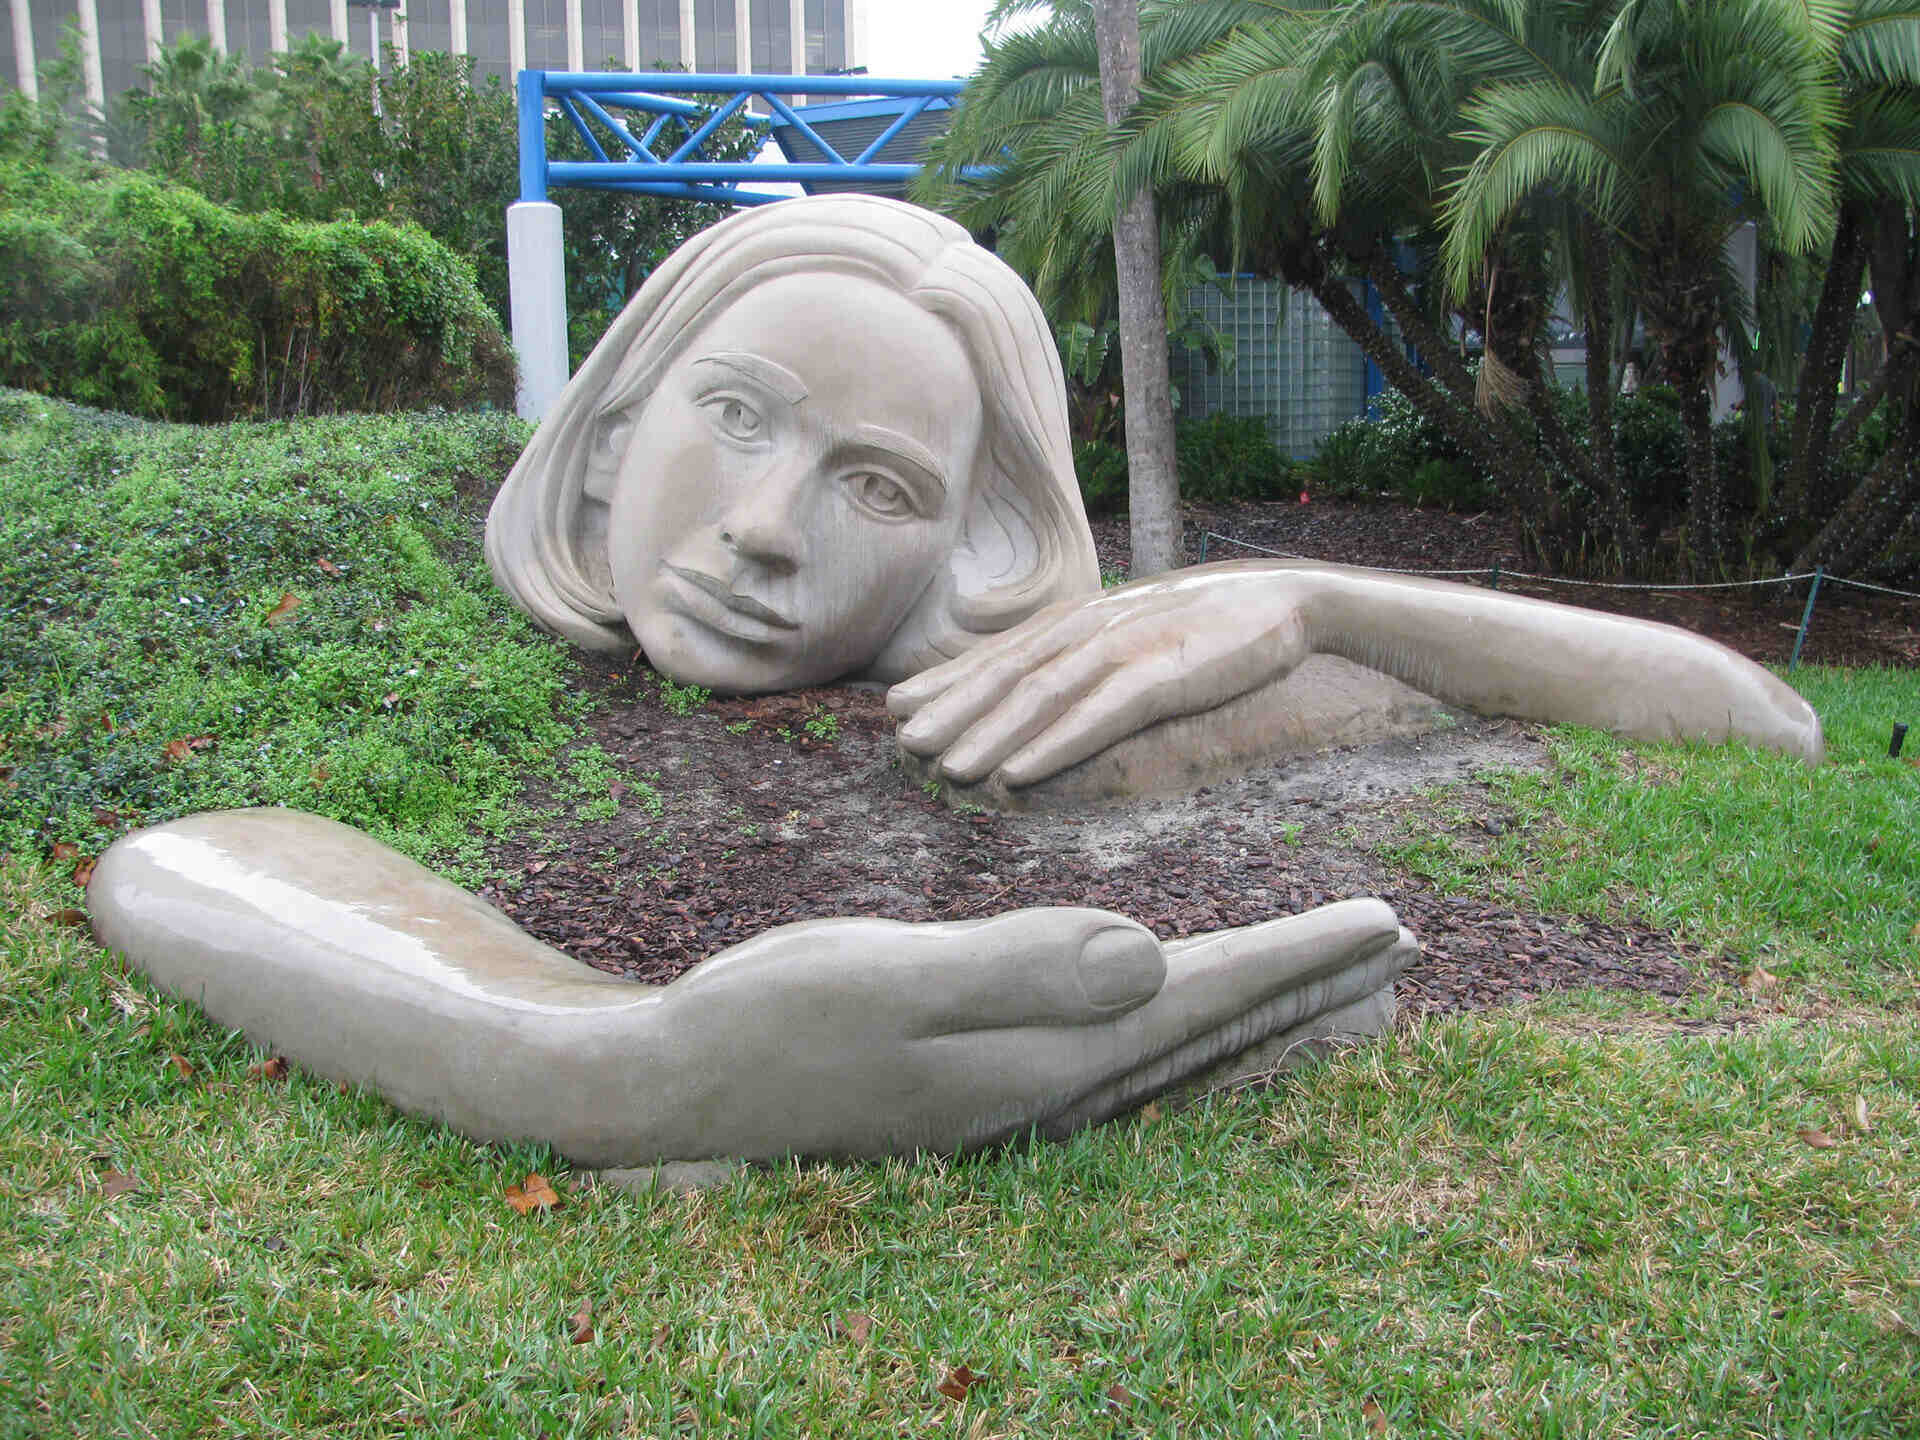 How To Make An Outdoor Sculpture